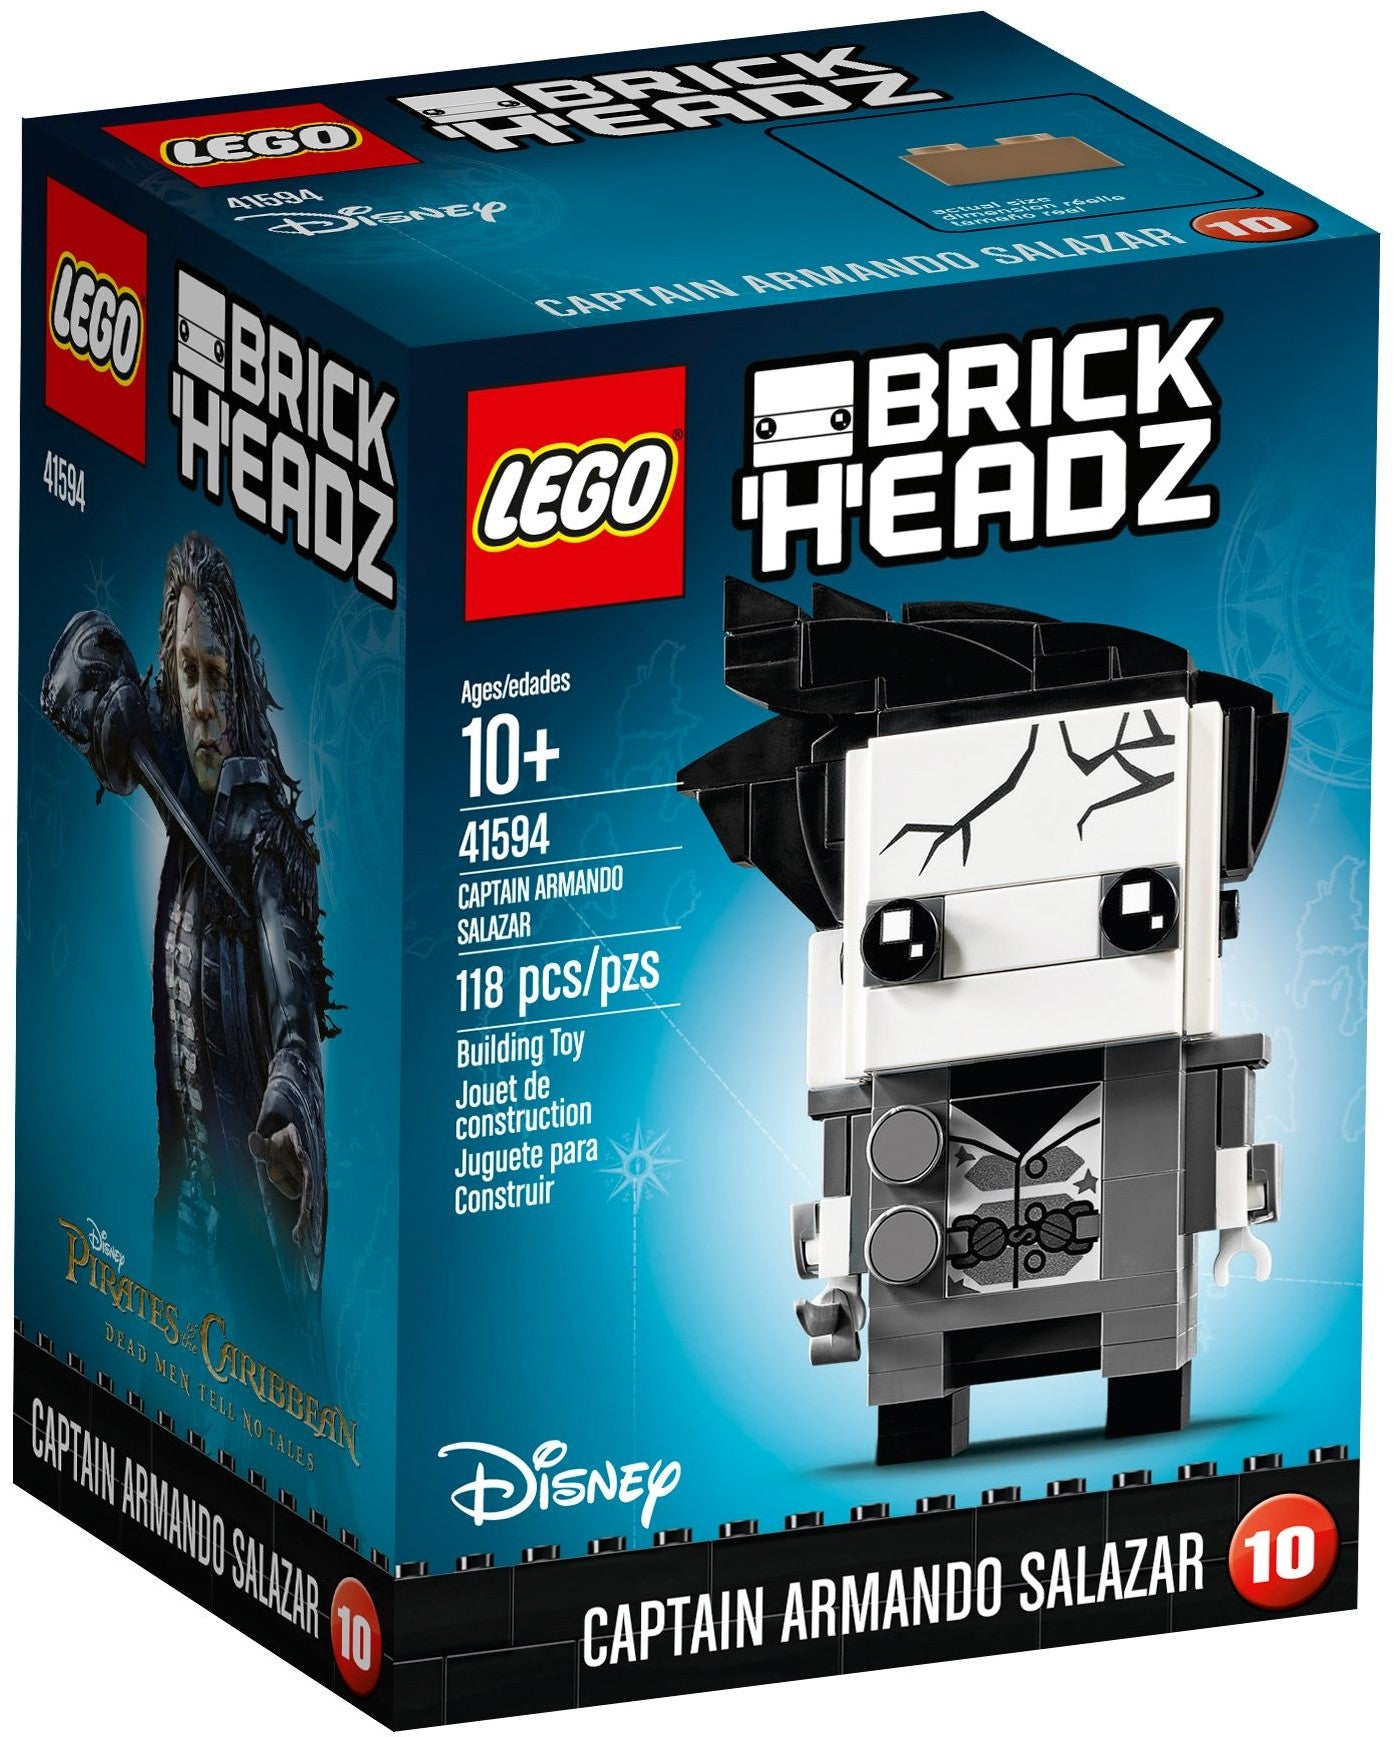 Lego Brickheadz 41594 - Captain Armando Salazar